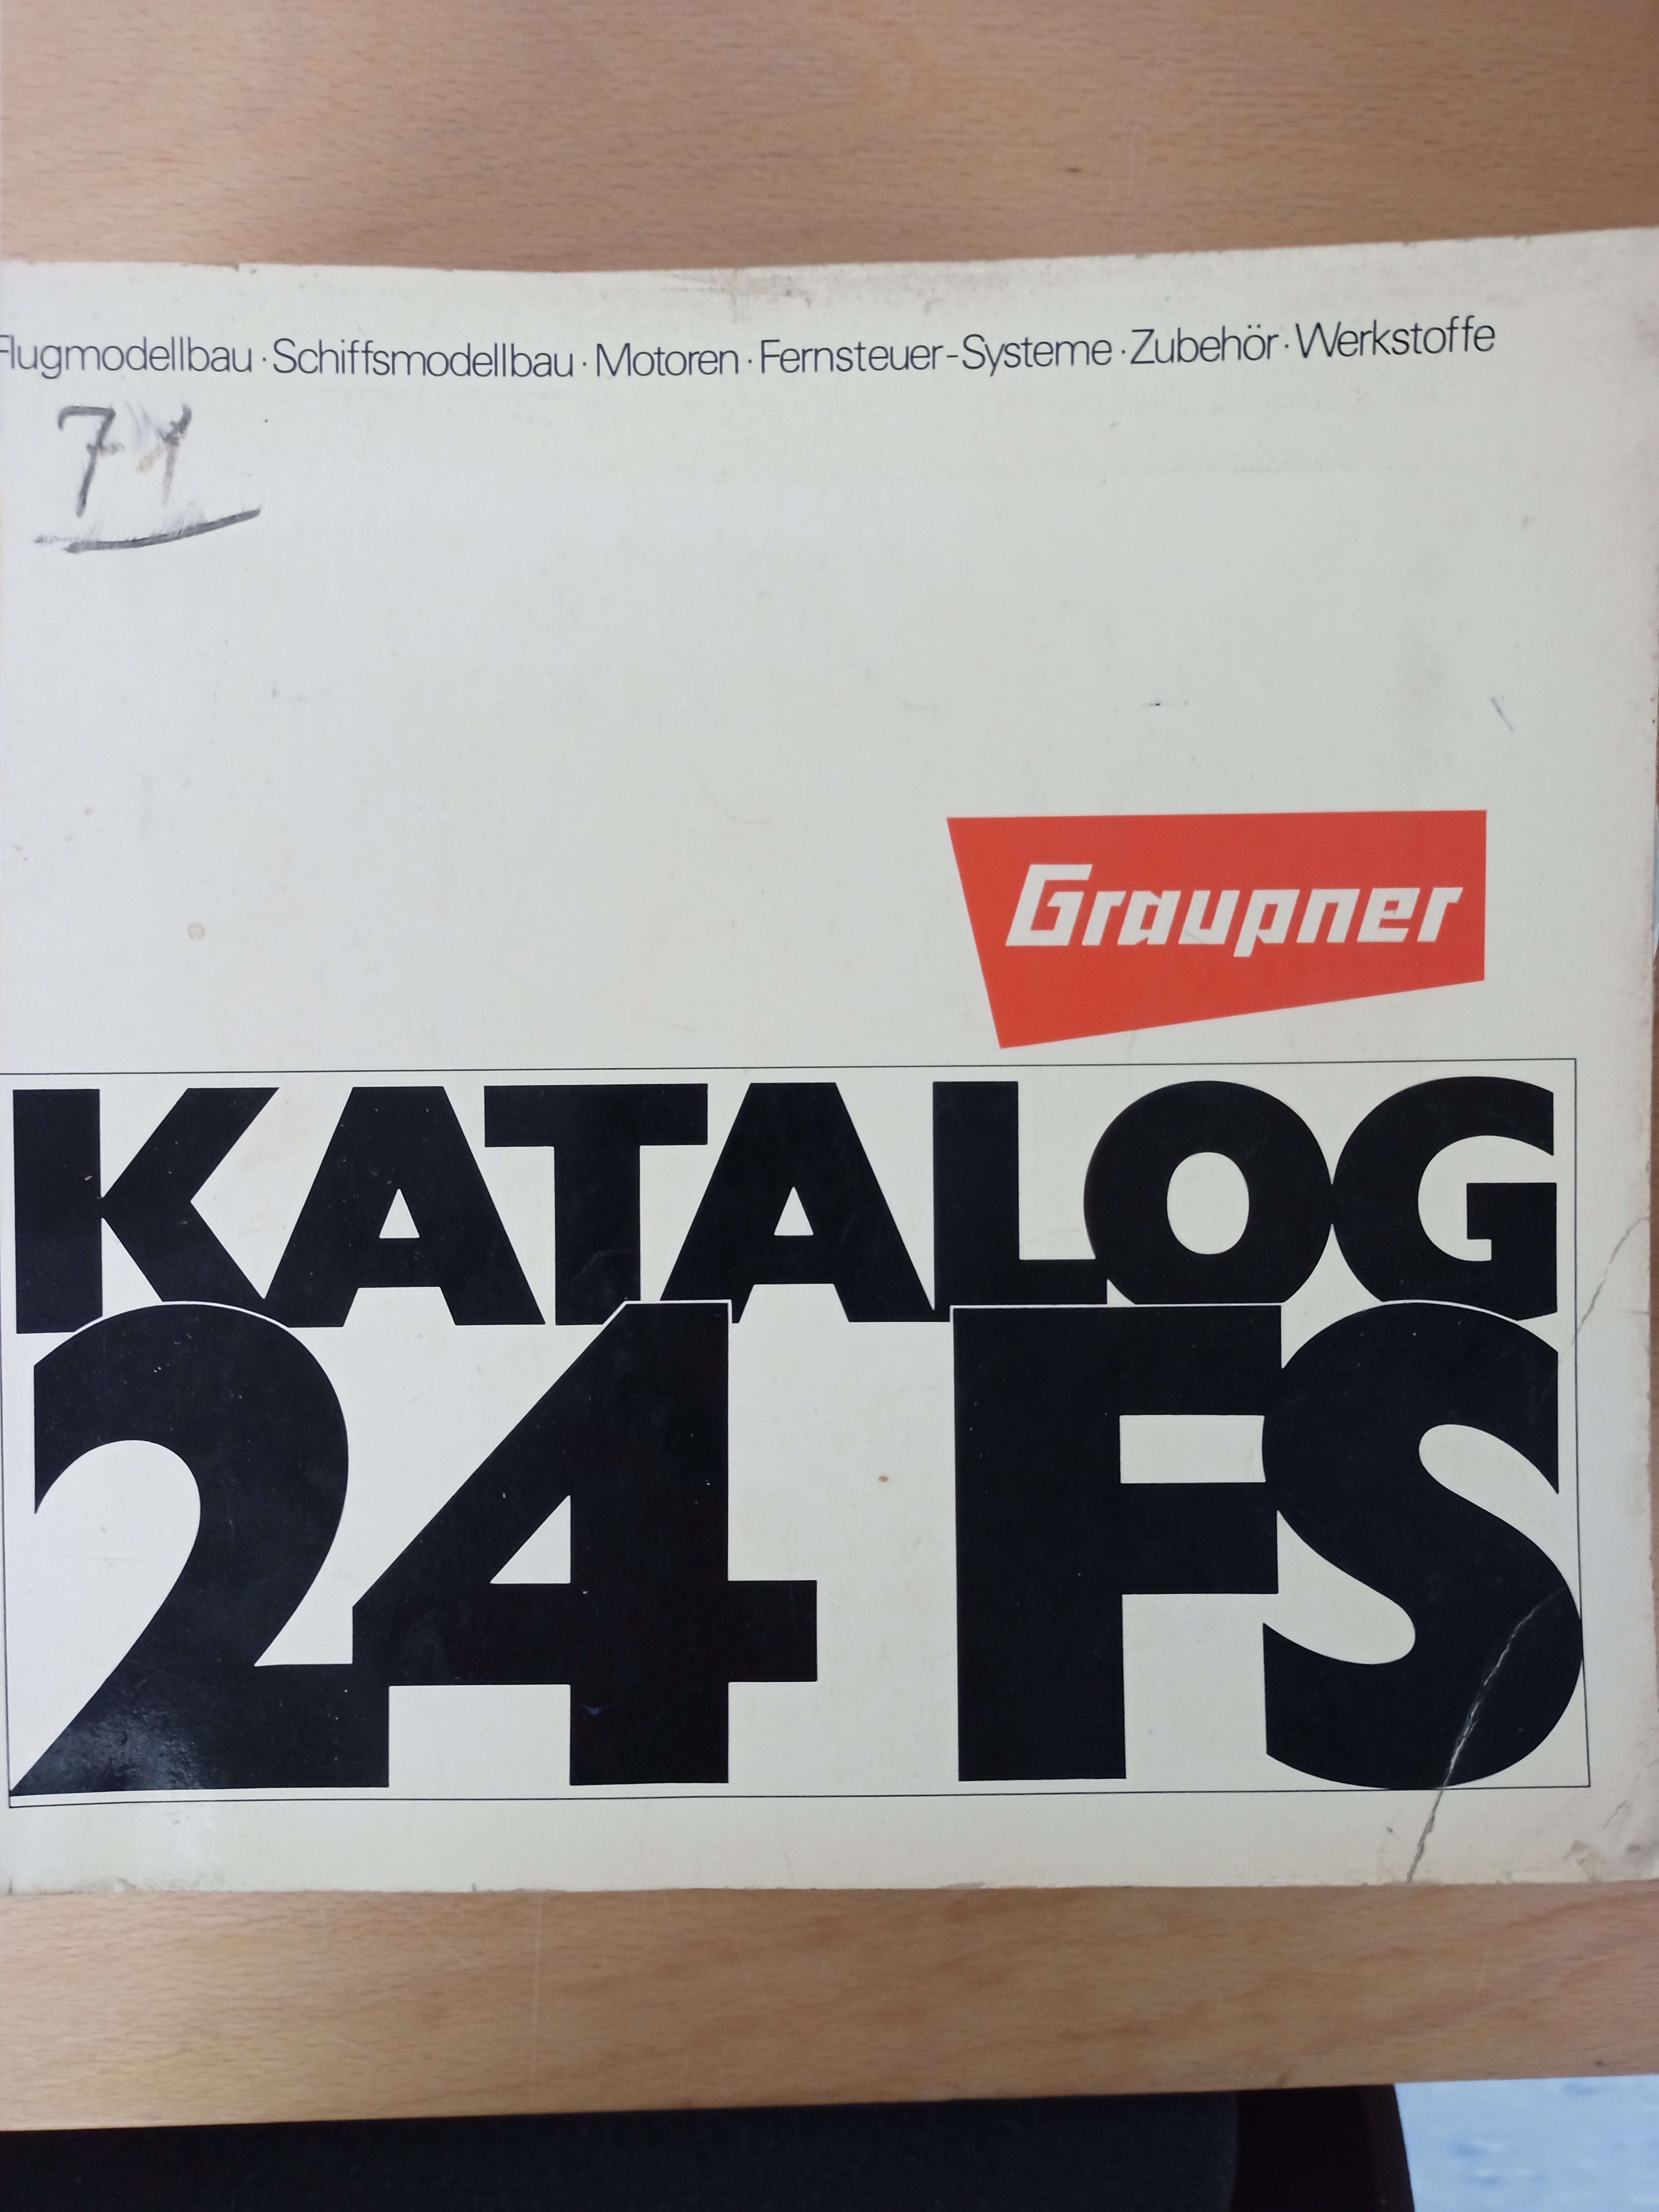 Graupner Katalog 24FS (Deutsches Segelflugmuseum mit Modellflug CC BY-NC-SA)